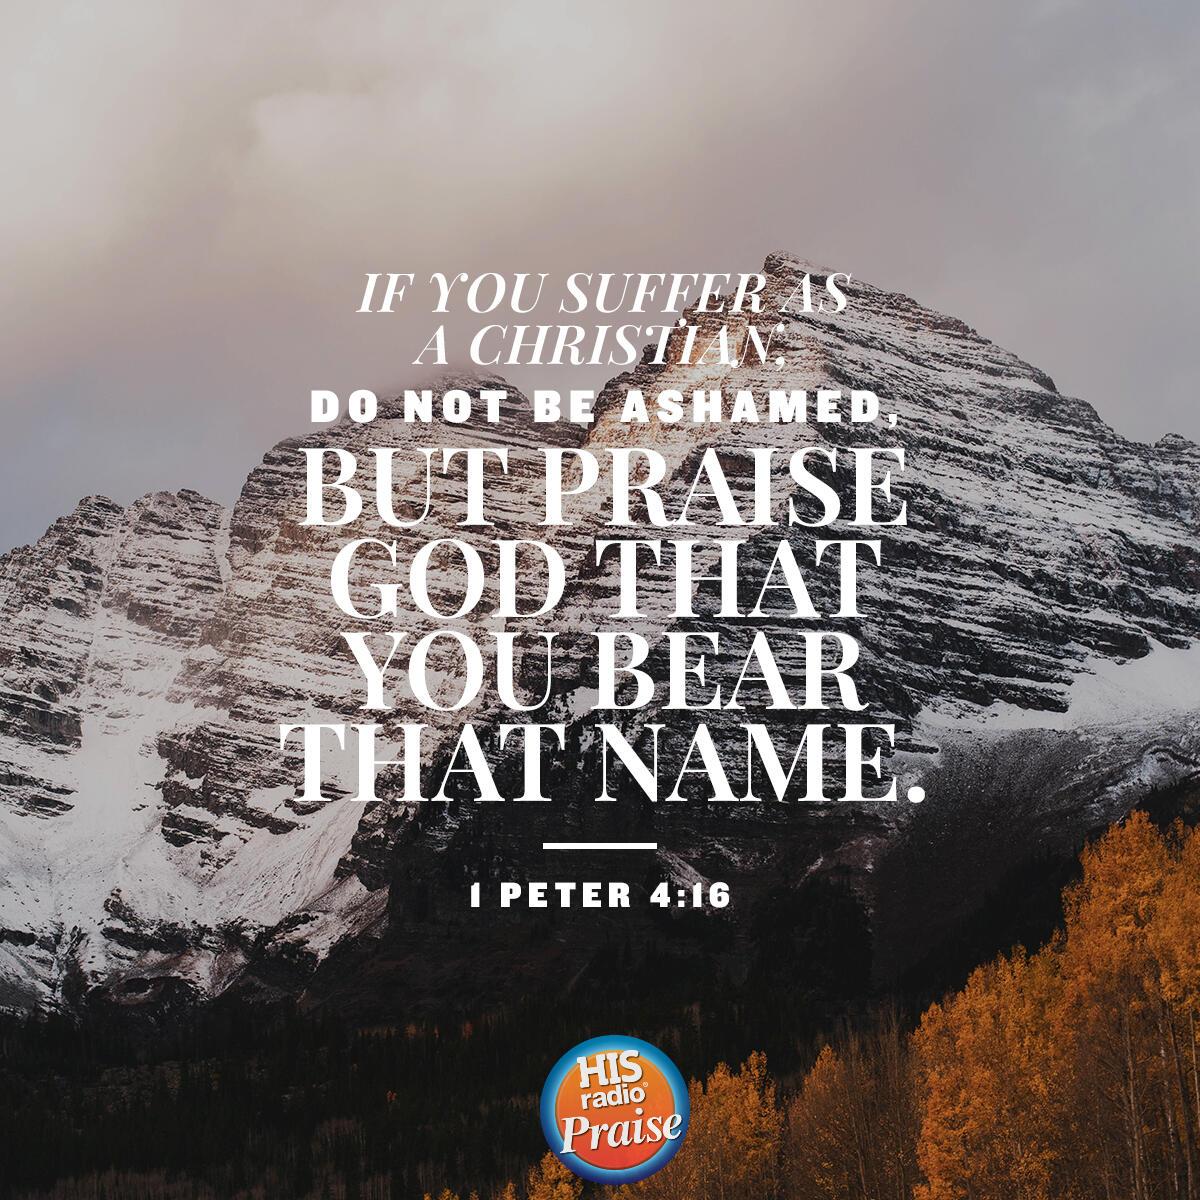 1 Peter 4:16